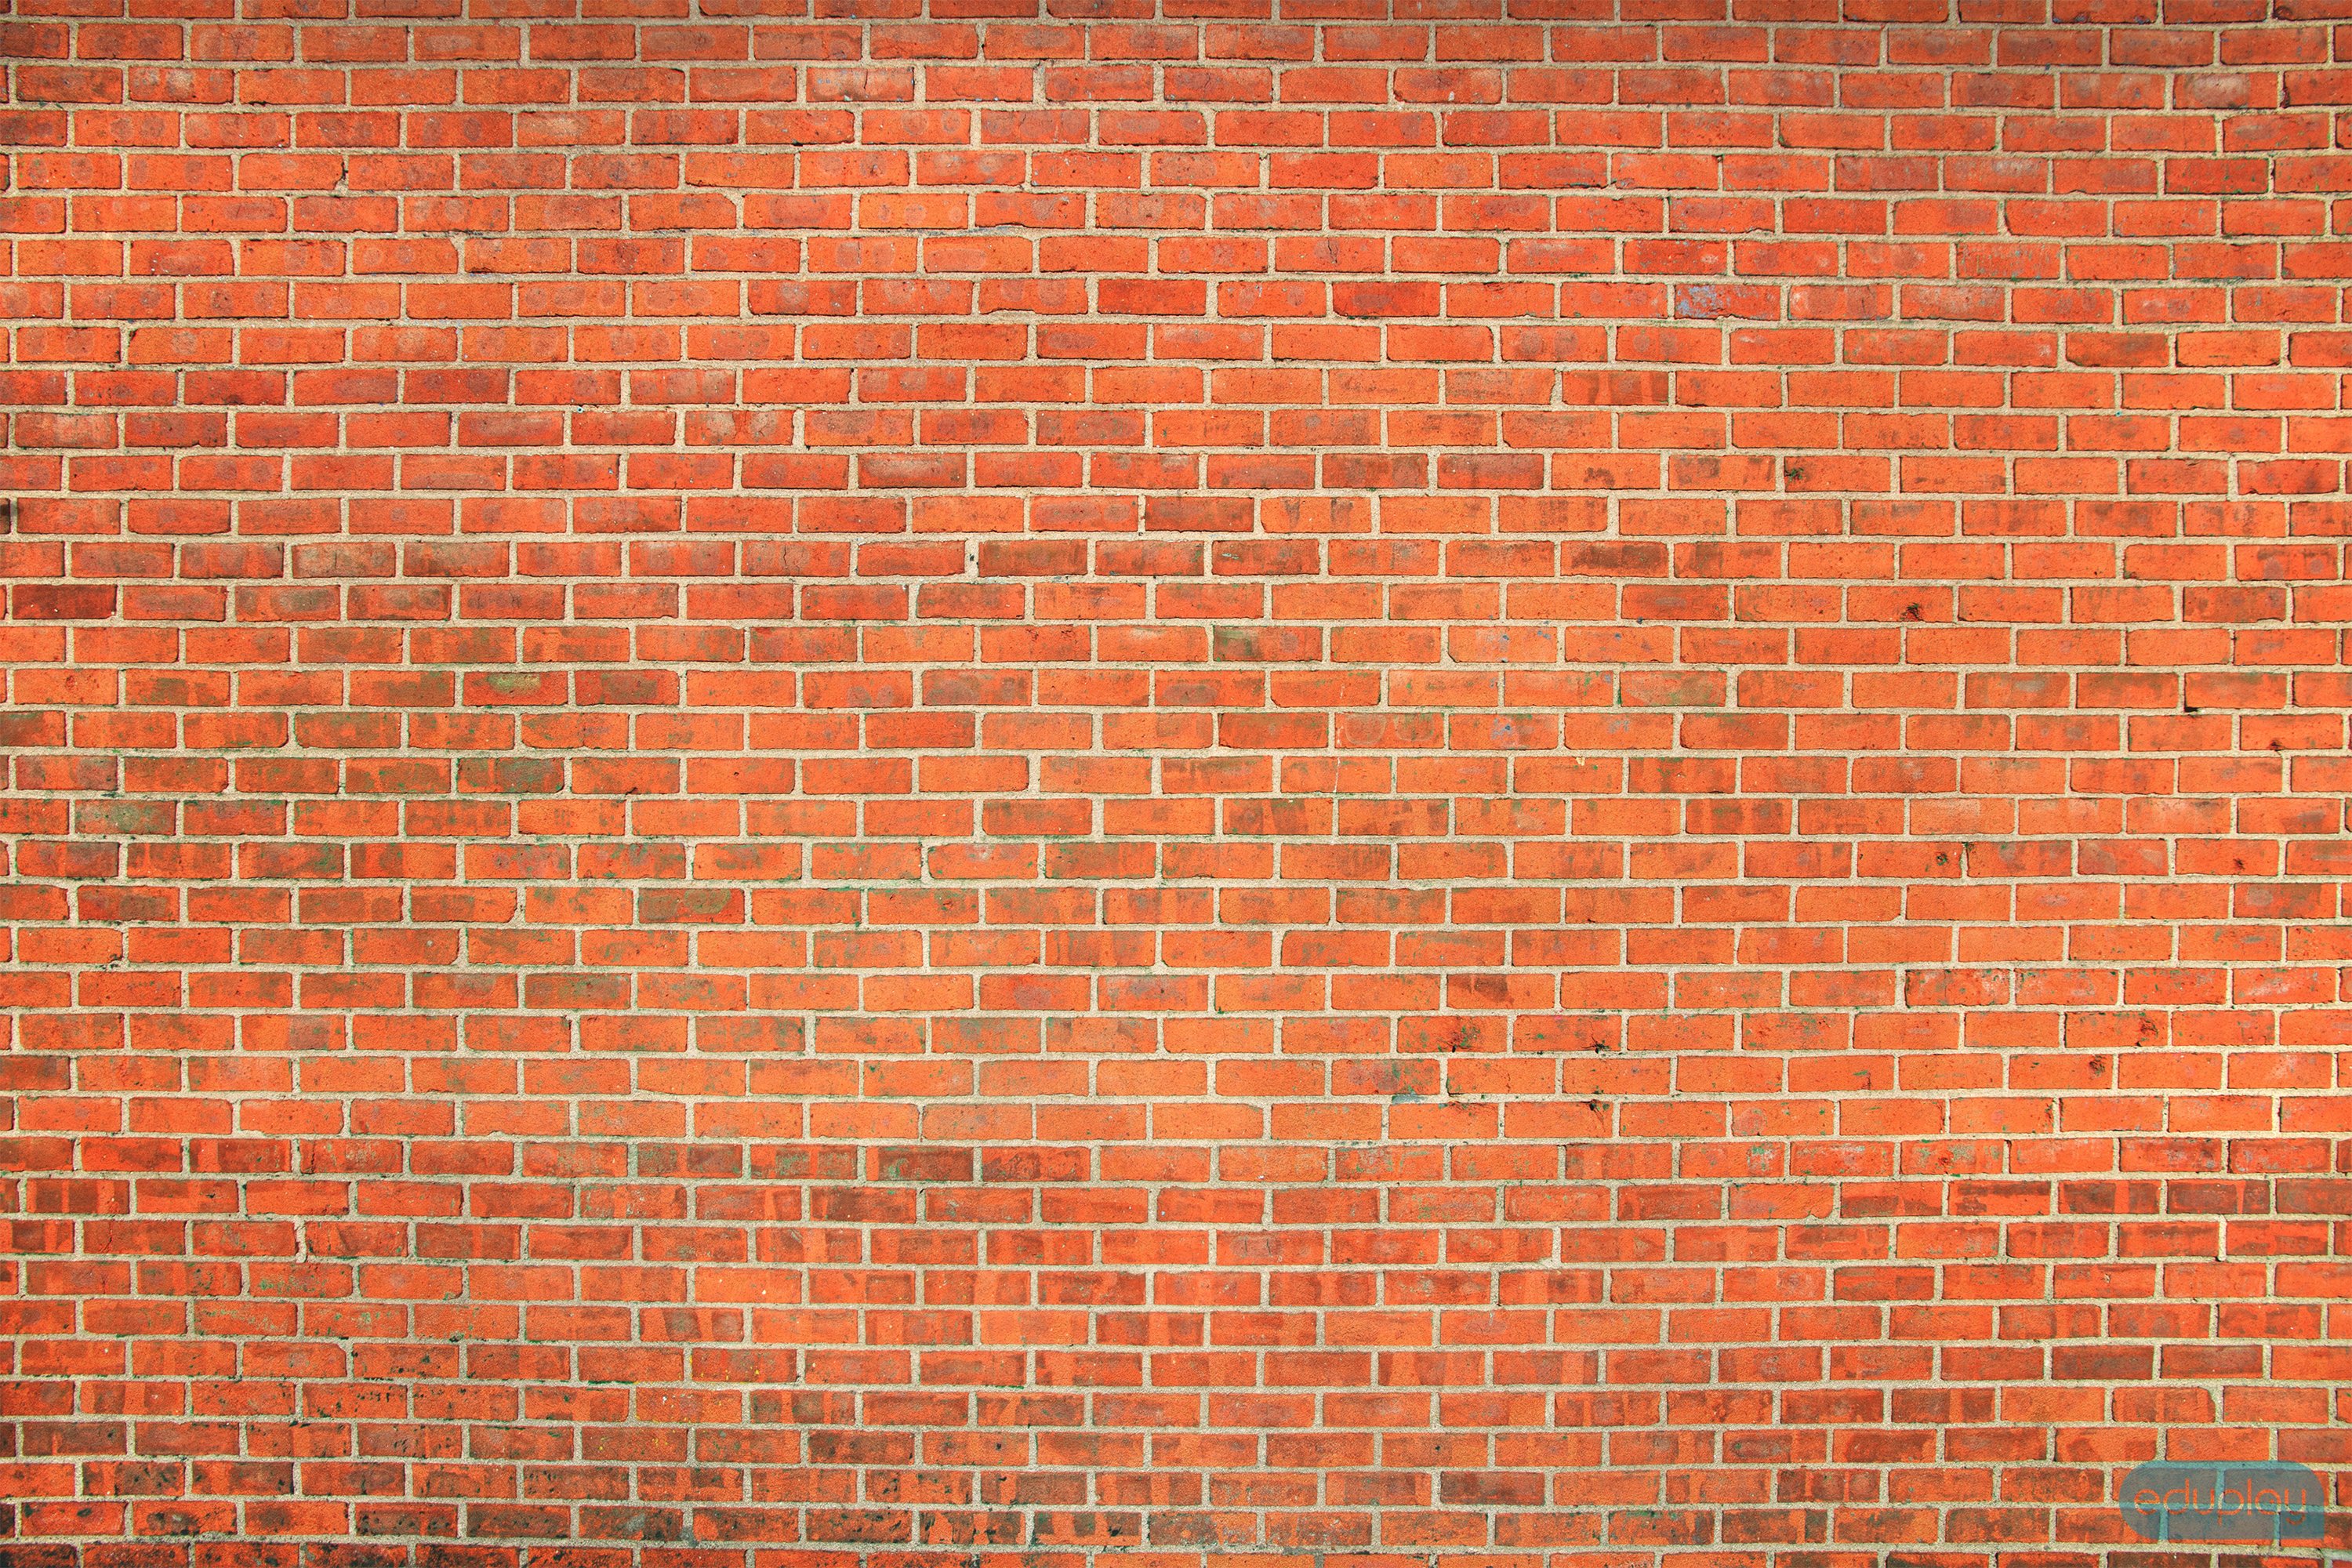 Brick wall - vgfolie